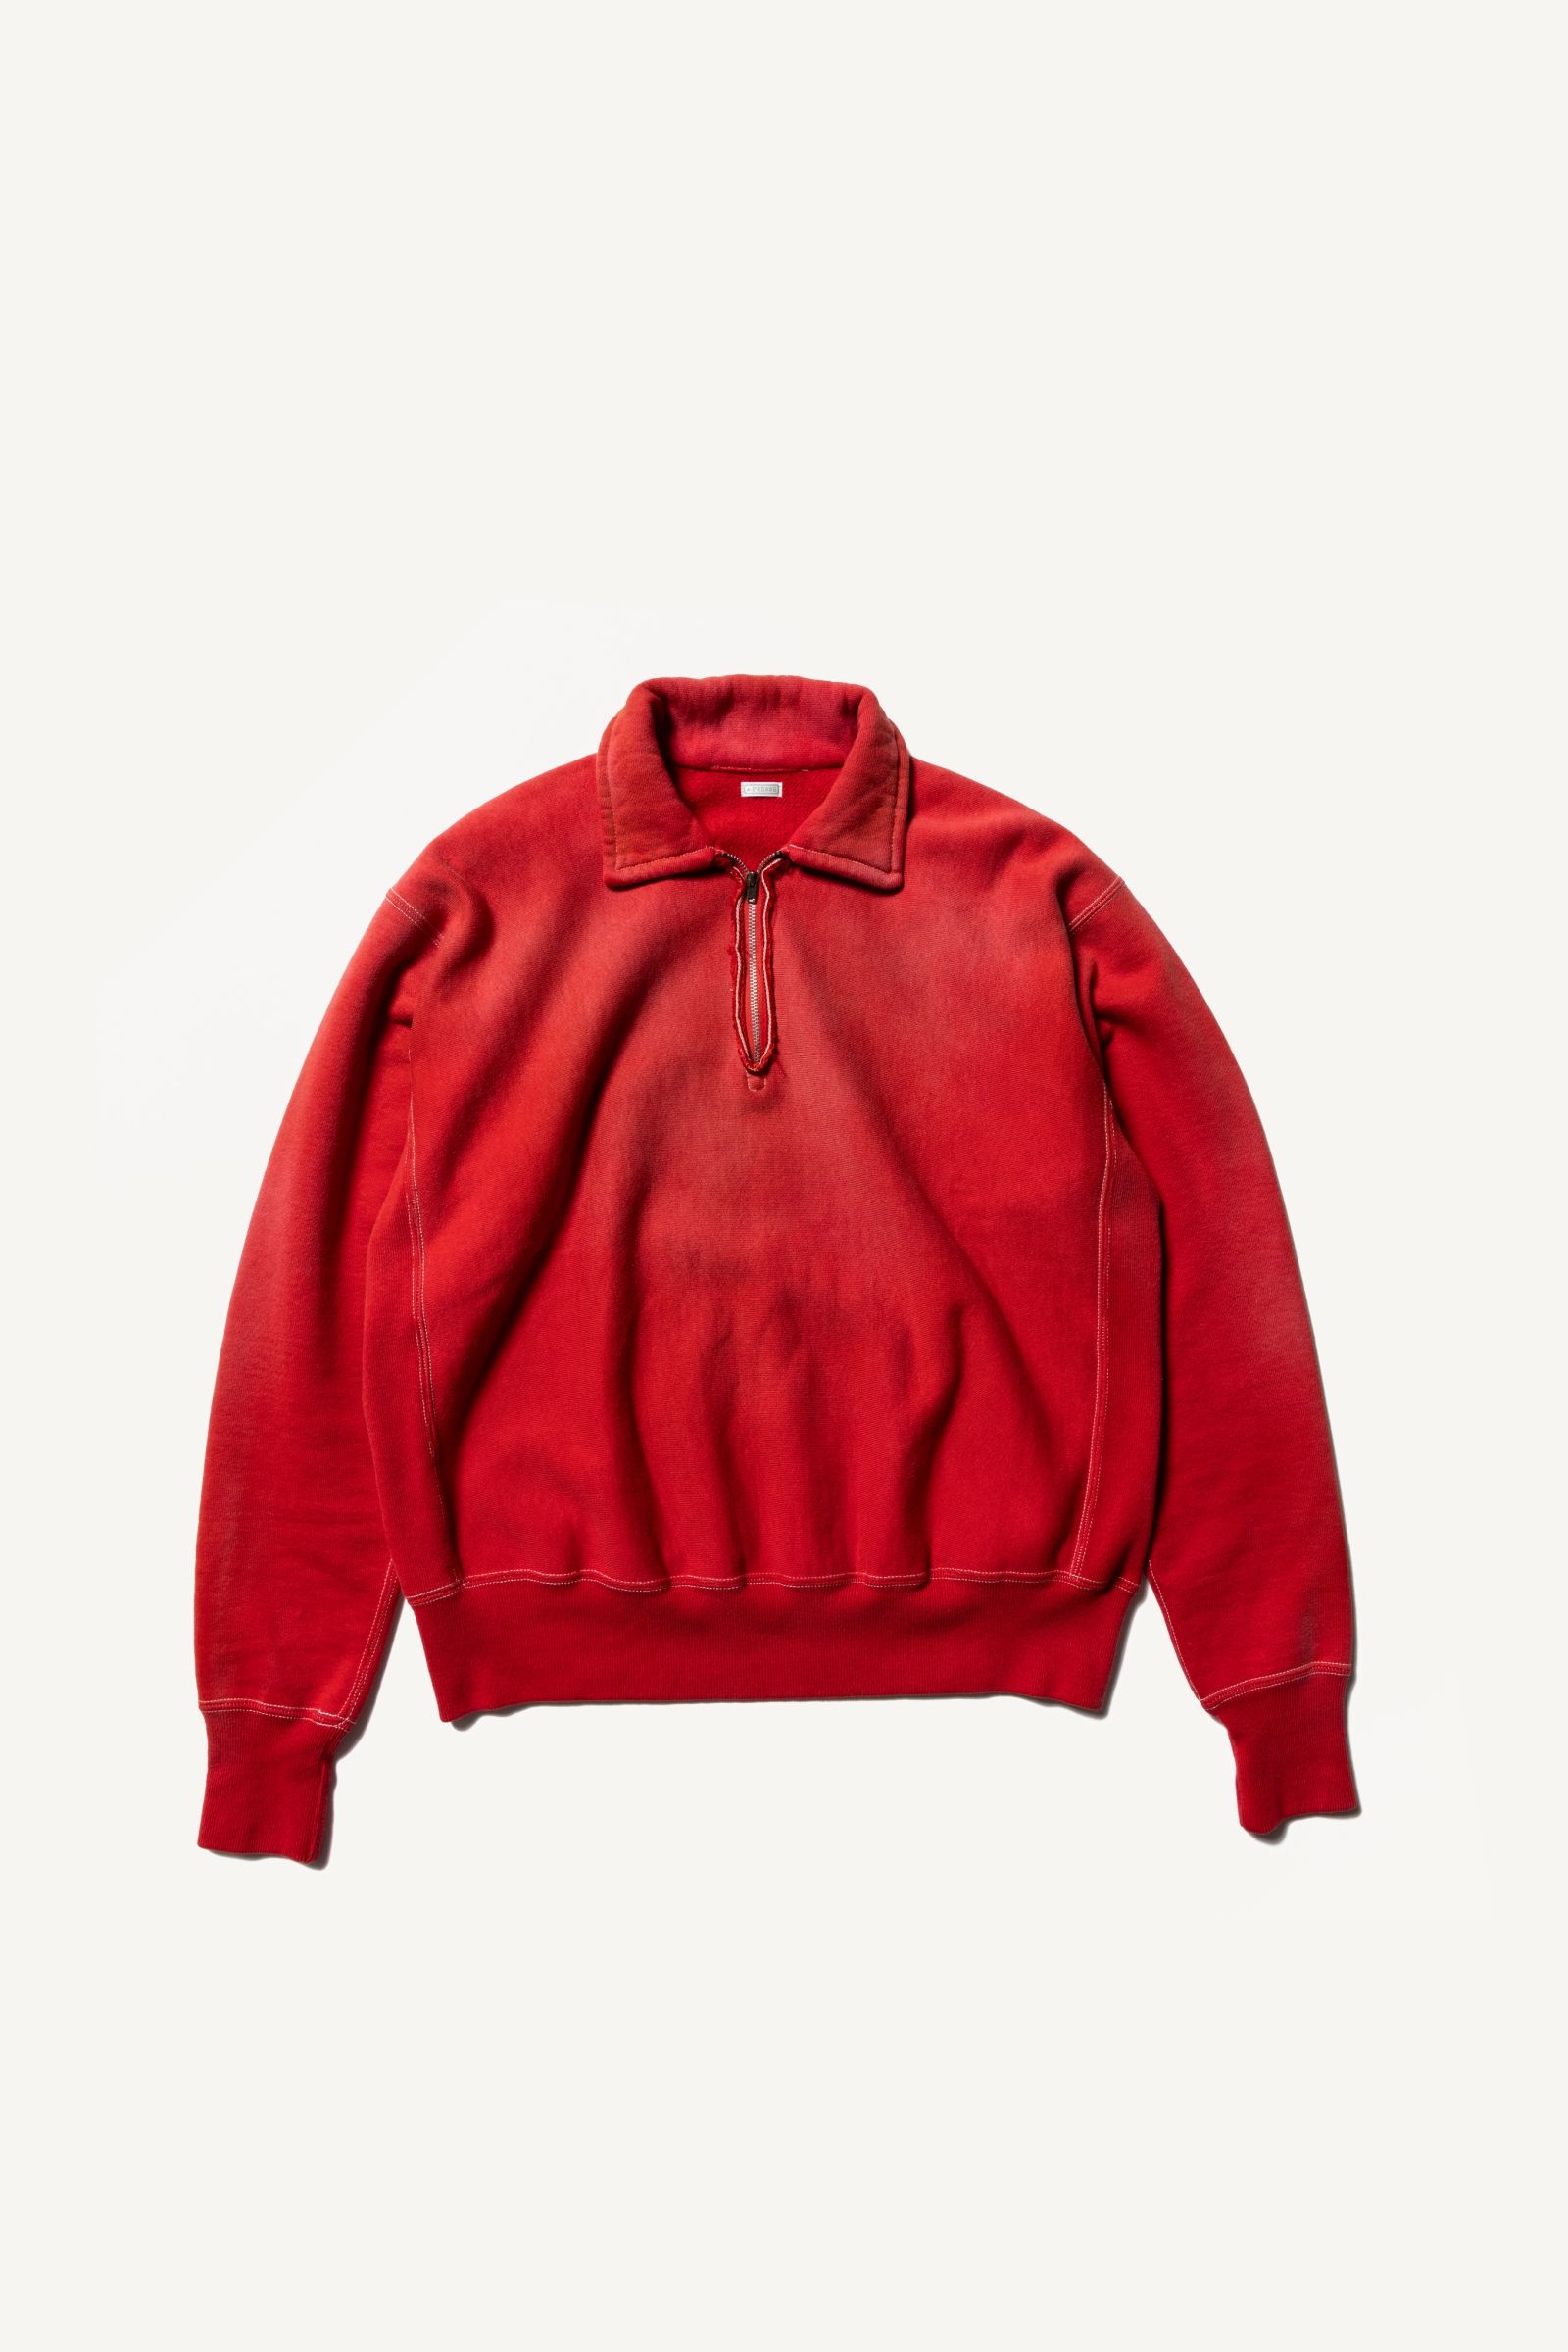 A.PRESSE - vintage half zip sweatshirt -red- 23ss | asterisk